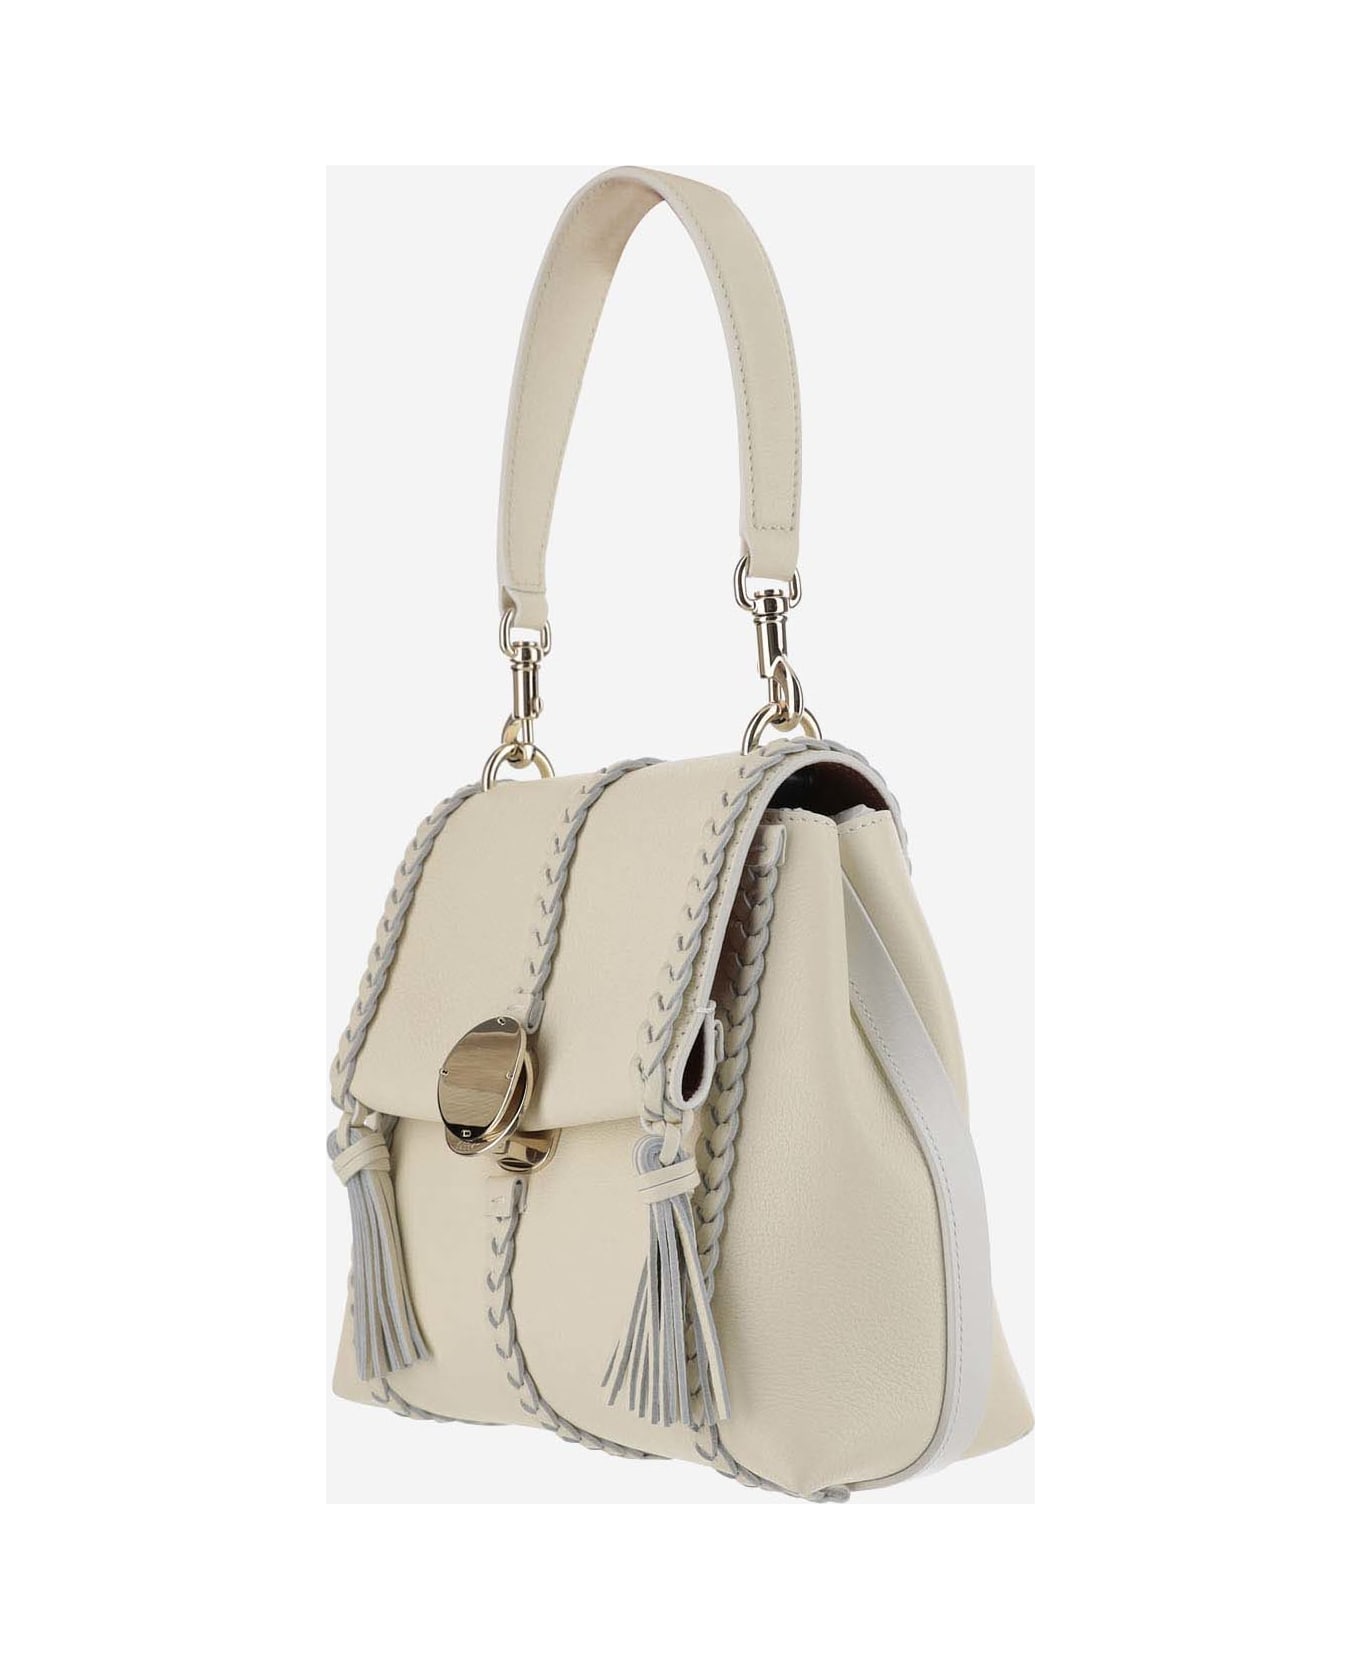 Chloé Small Penelope Shoulder Bag - White